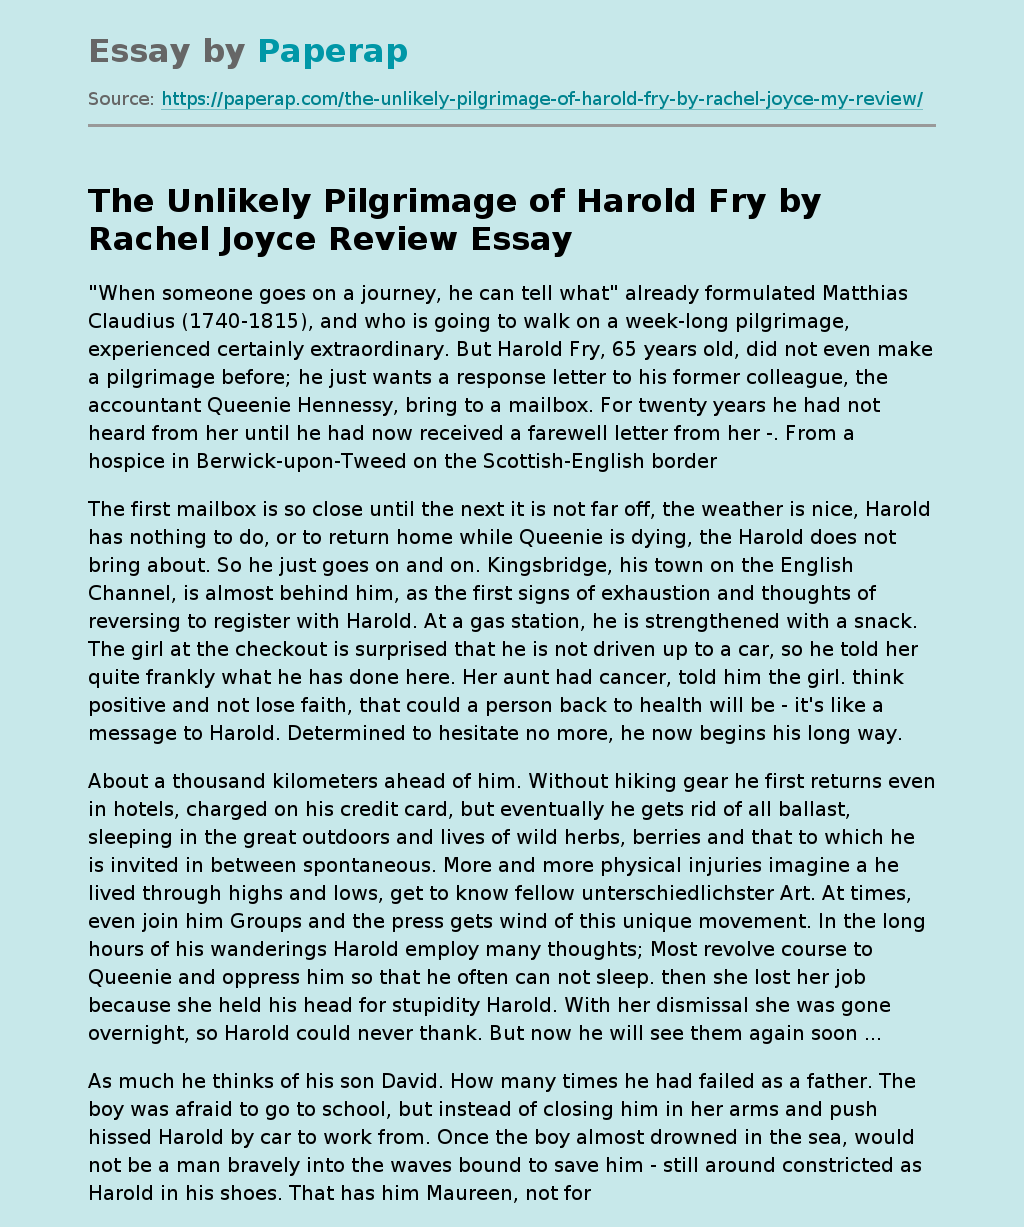 The Unlikely Pilgrimage of Harold Fry by Rachel Joyce Review